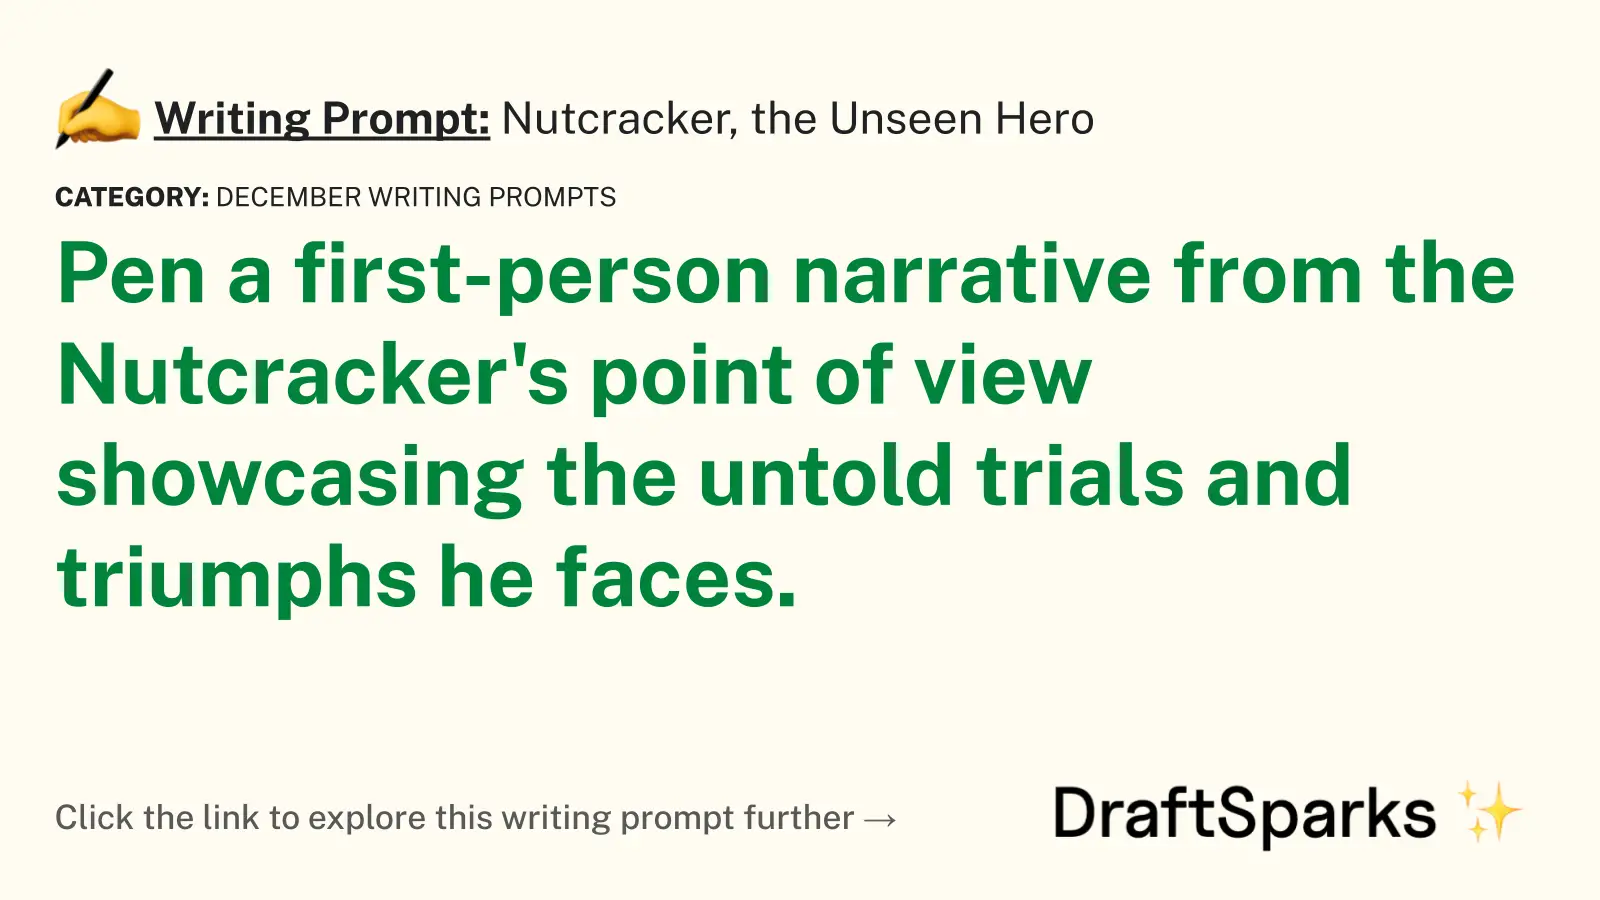 Nutcracker, the Unseen Hero